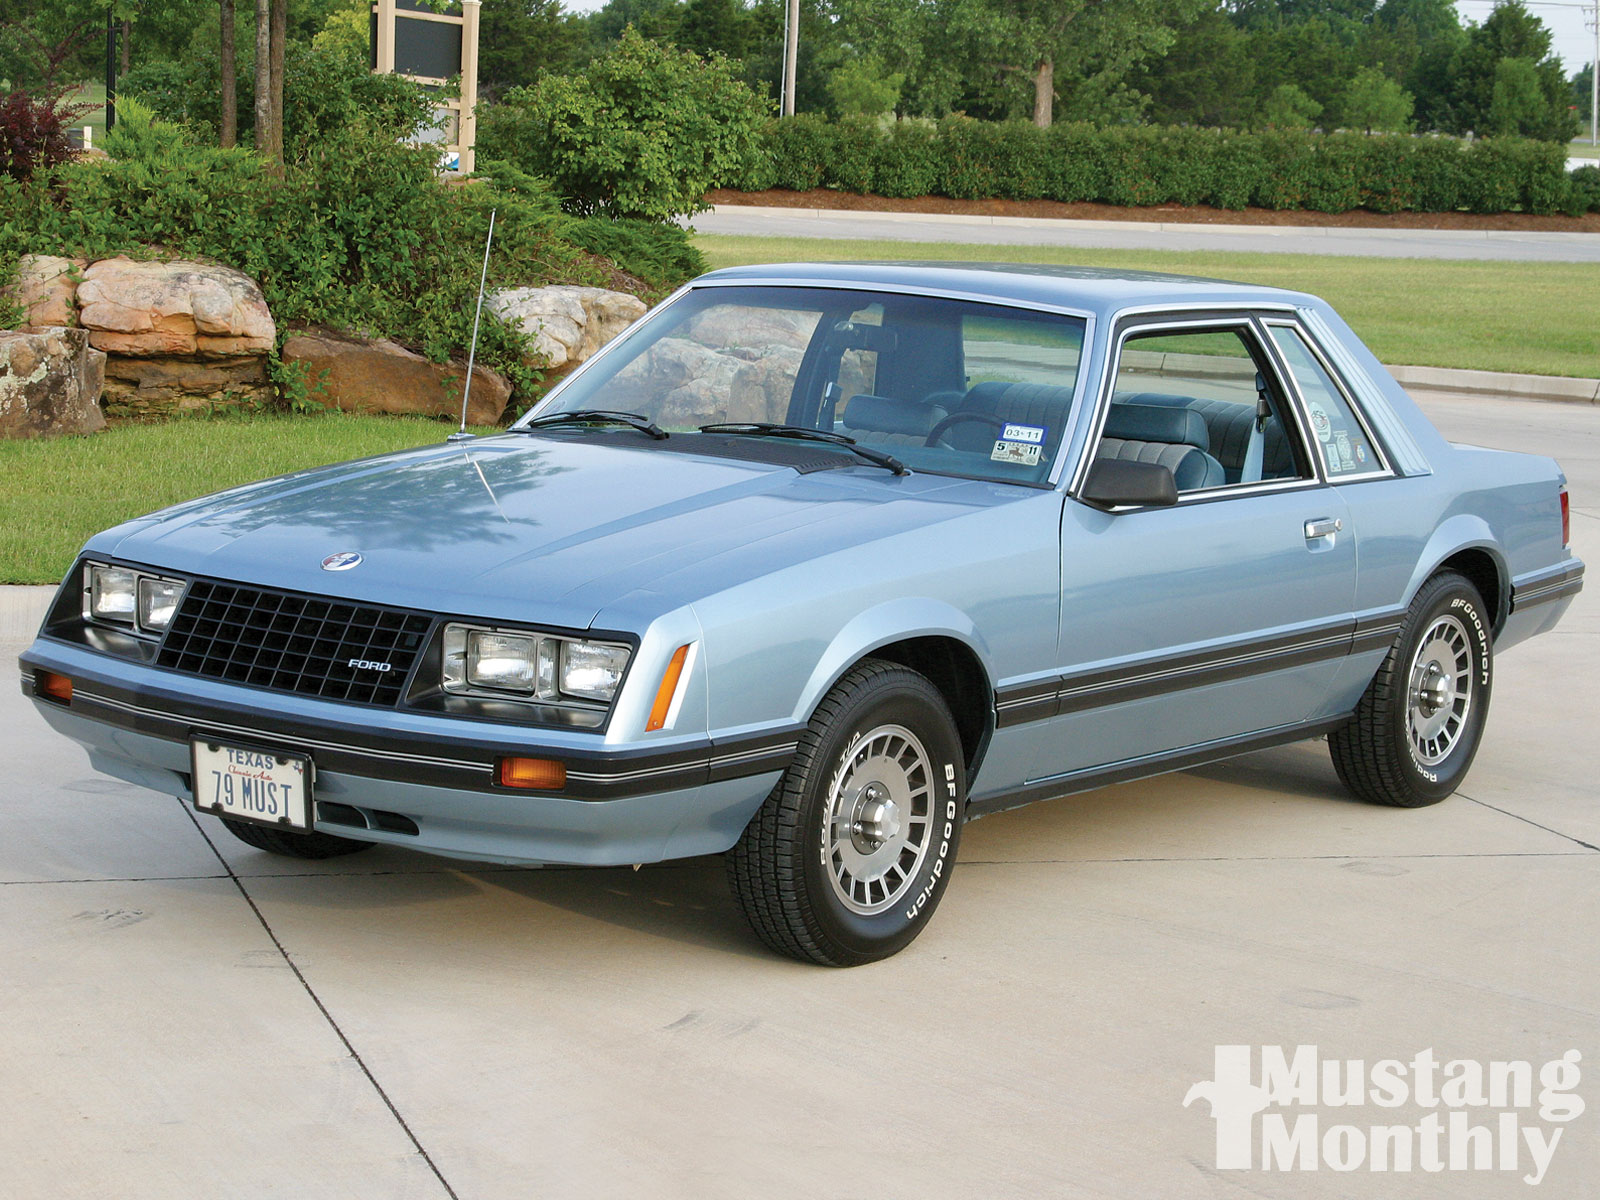 1979 Mustang #10